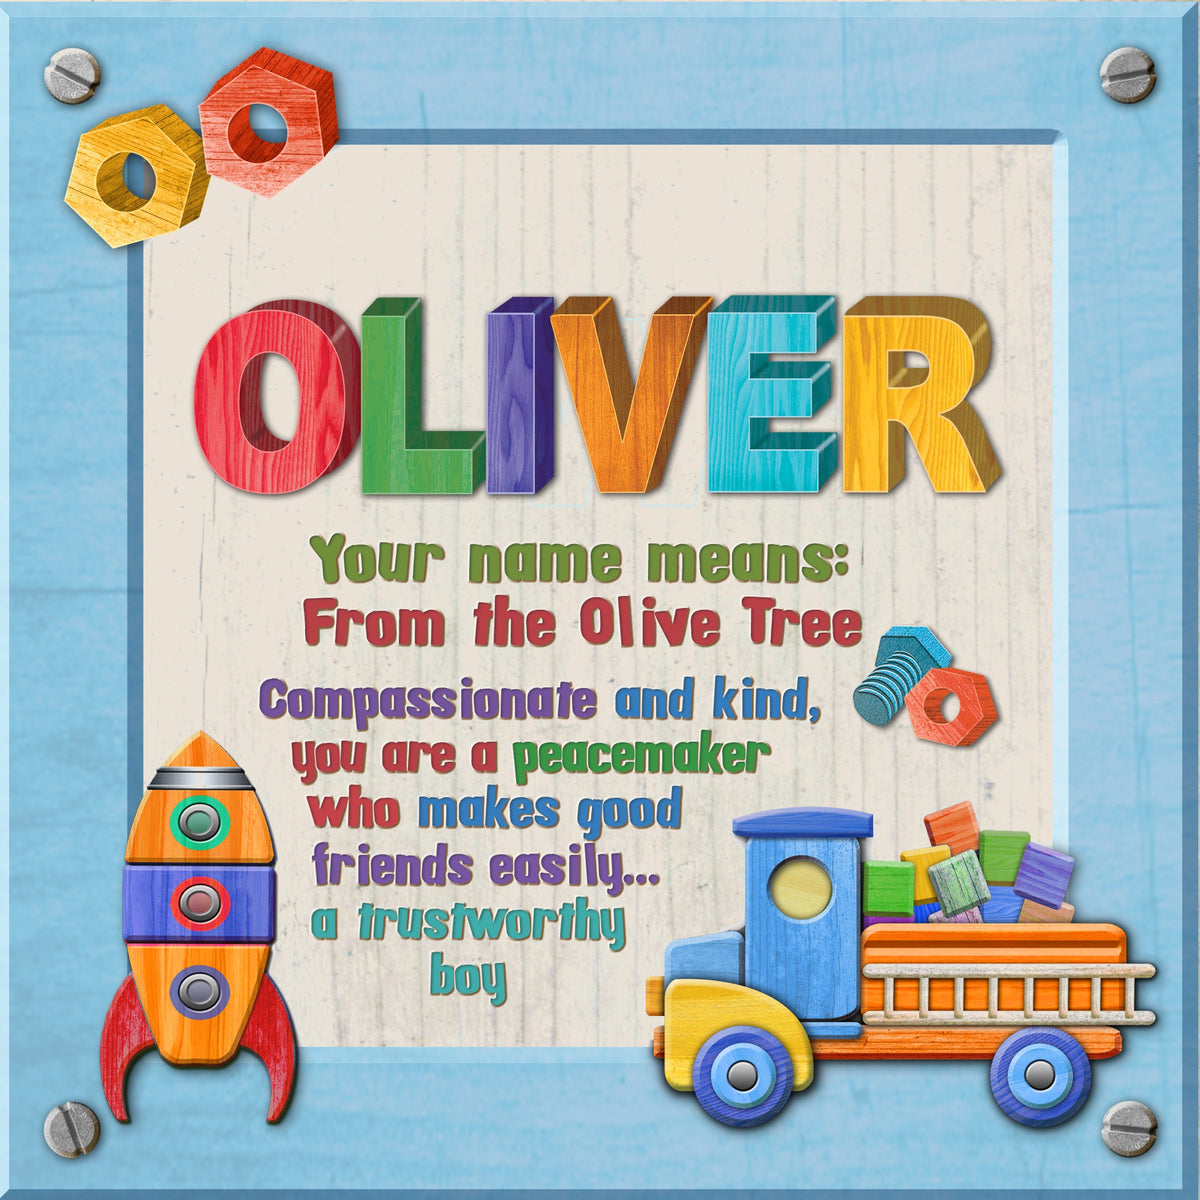 Oliver Name Meaning - Oliver name Origin, Name Oliver, Meaning of